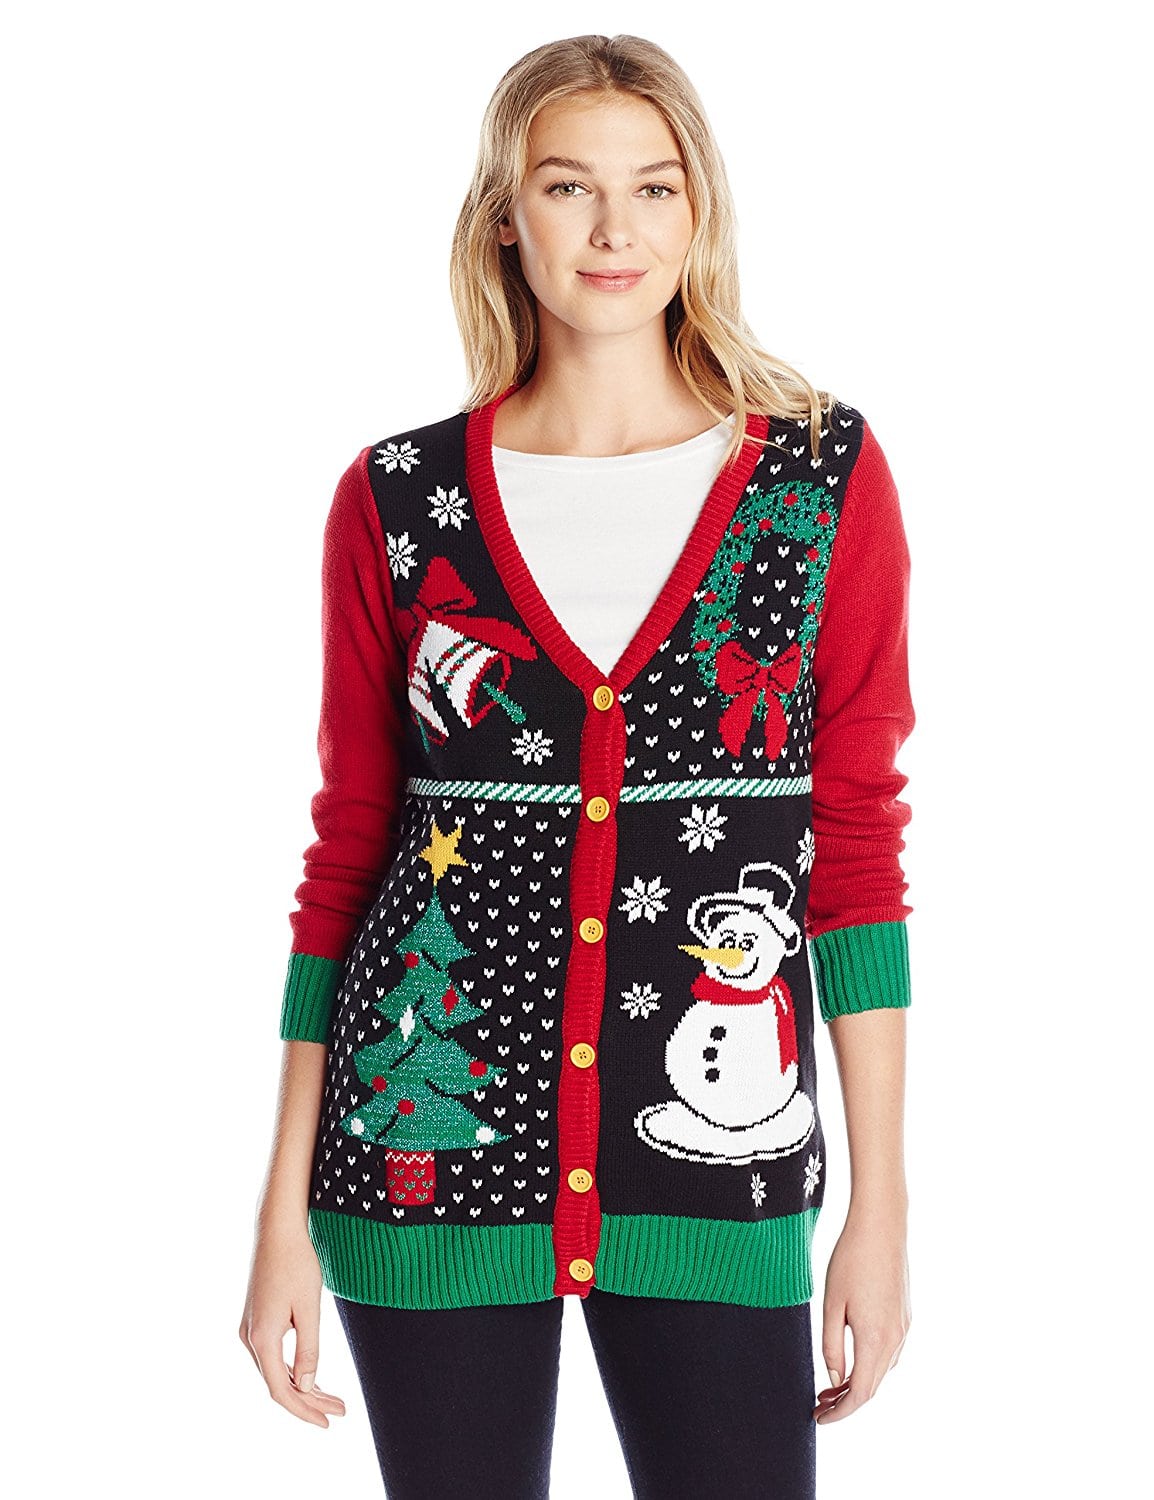 Women's Ugly Christmas Sweater